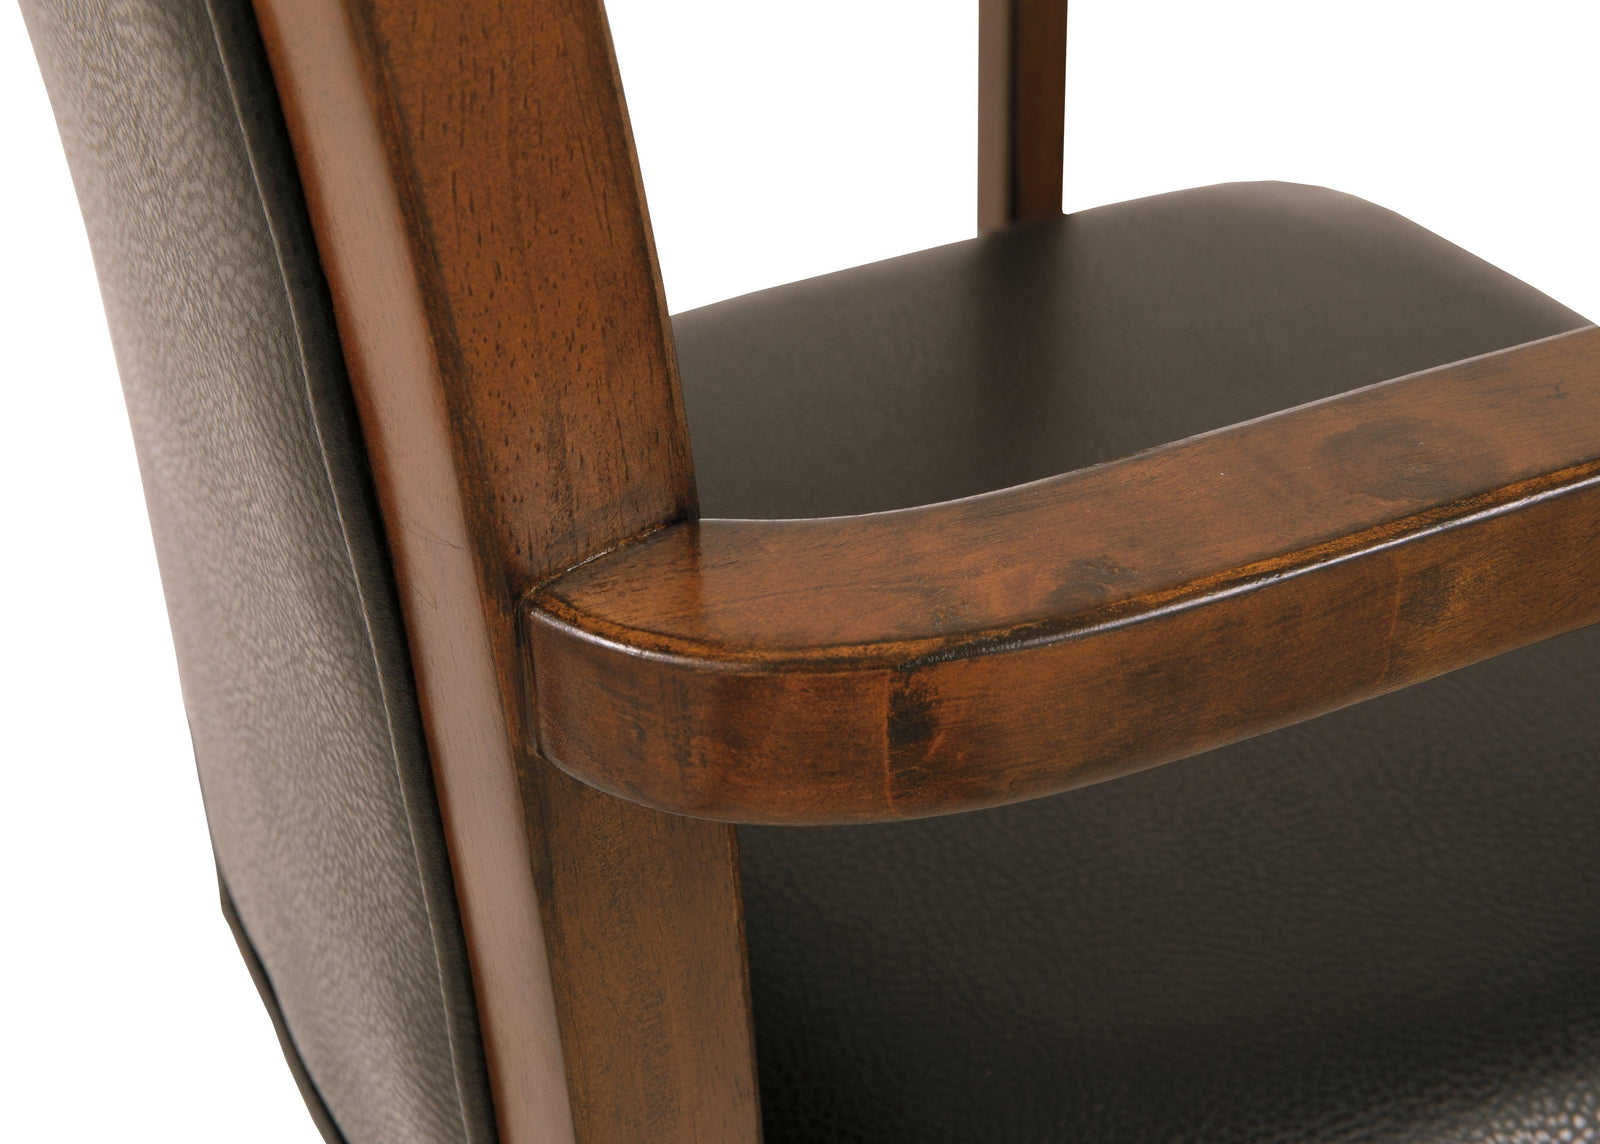 Hamlyn Medium Brown Home Office Desk With Chair And Storage - Ella Furniture